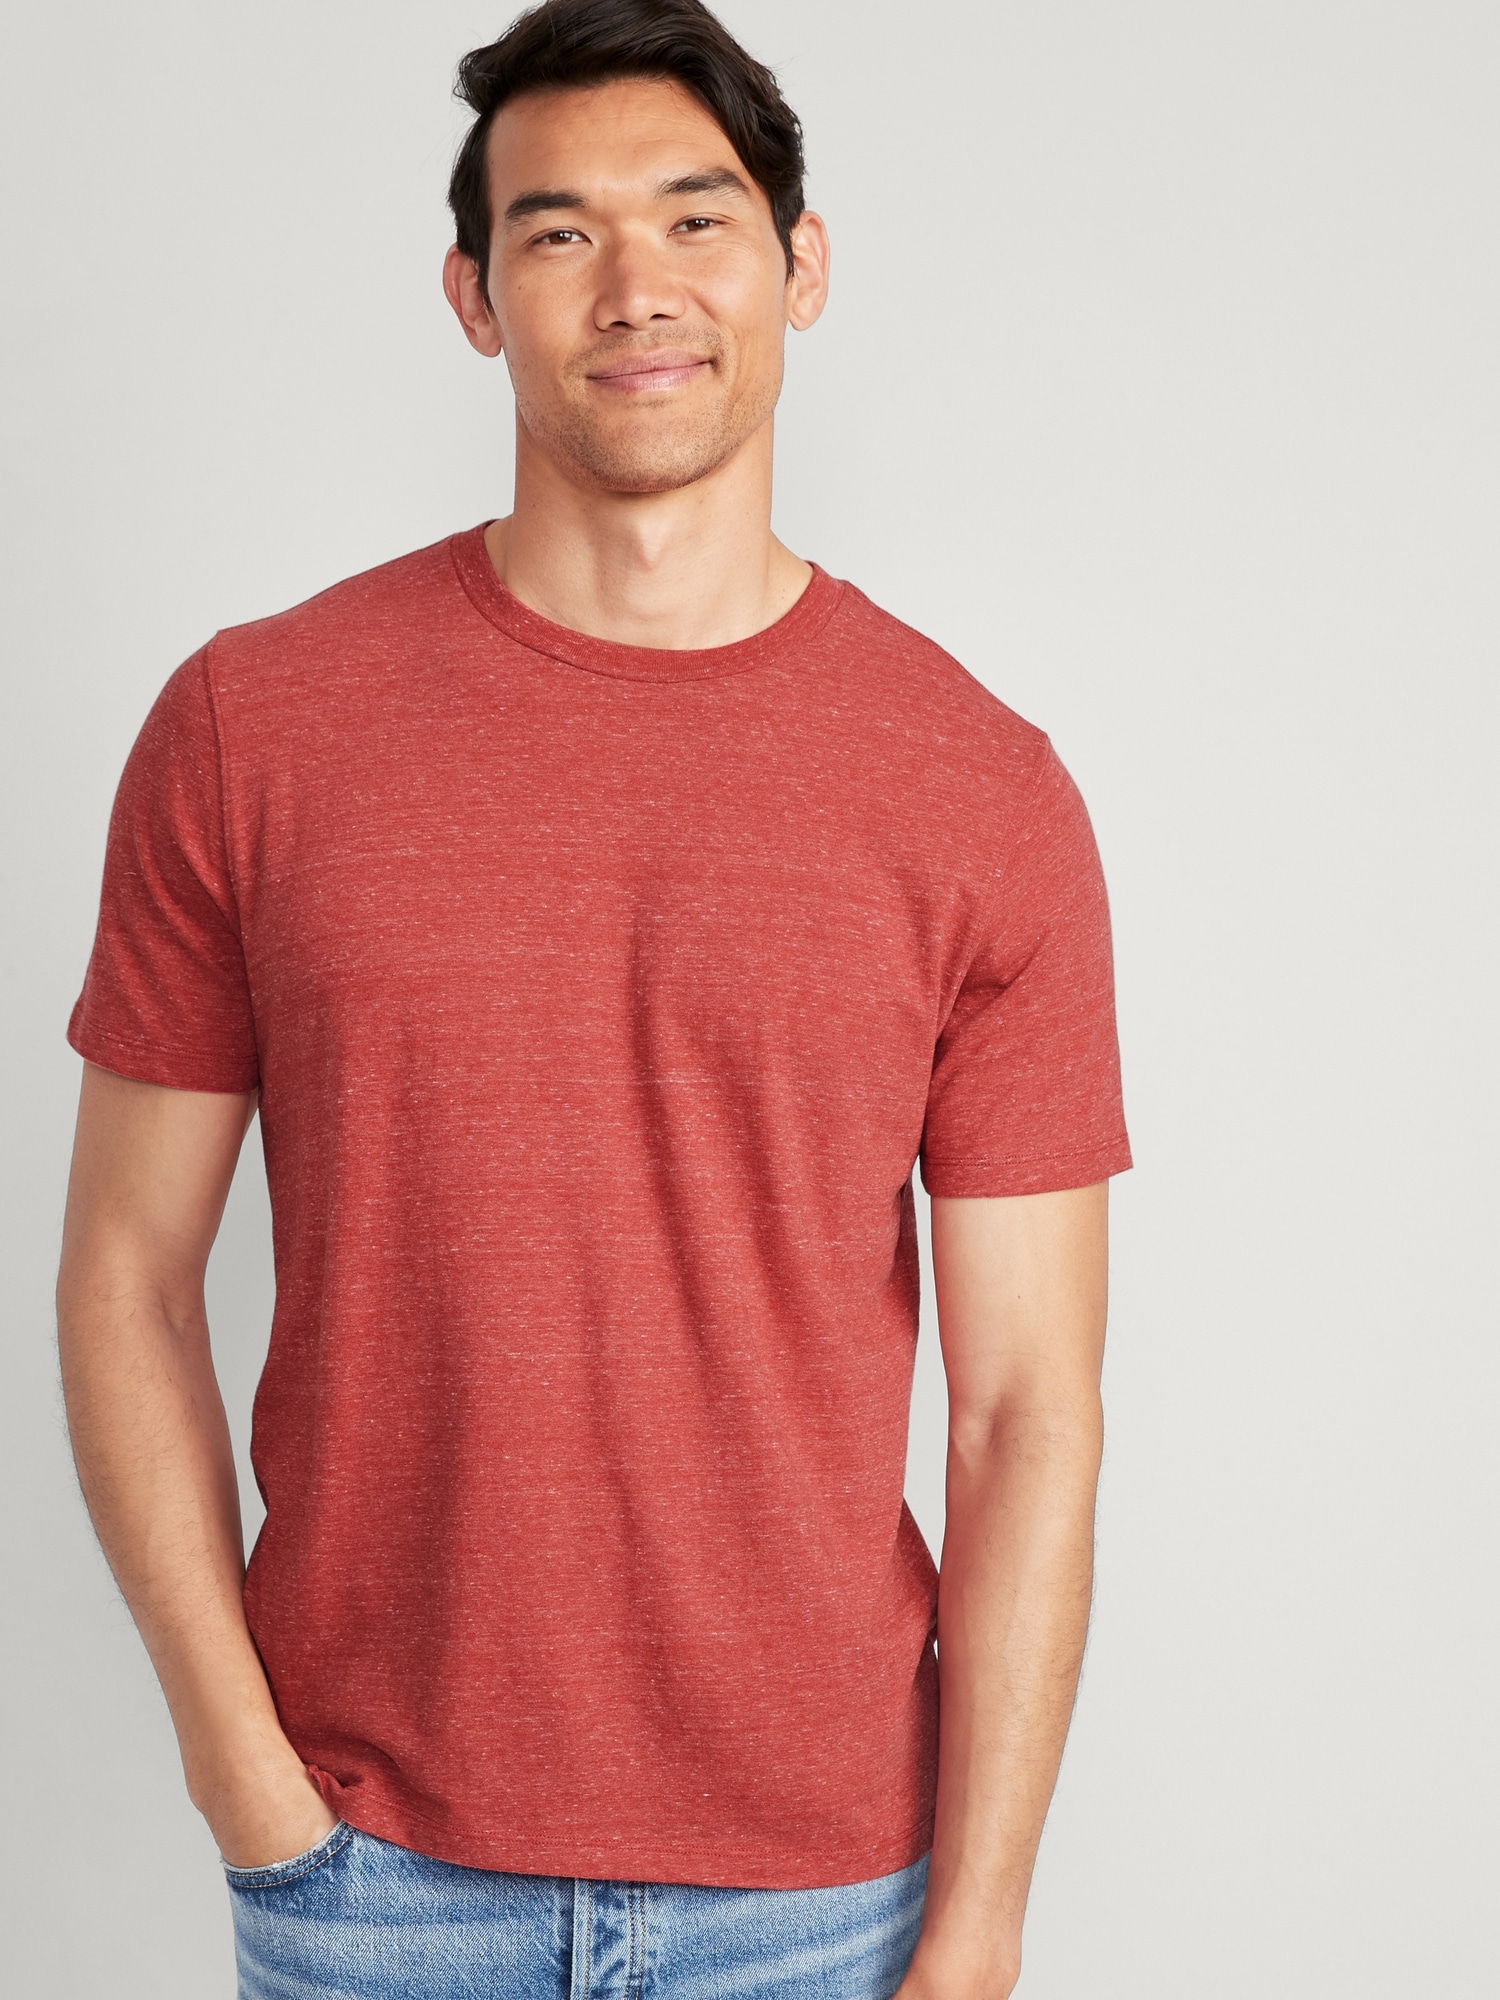 Old Navy Slub-Knit T-Shirt for Men red. 1